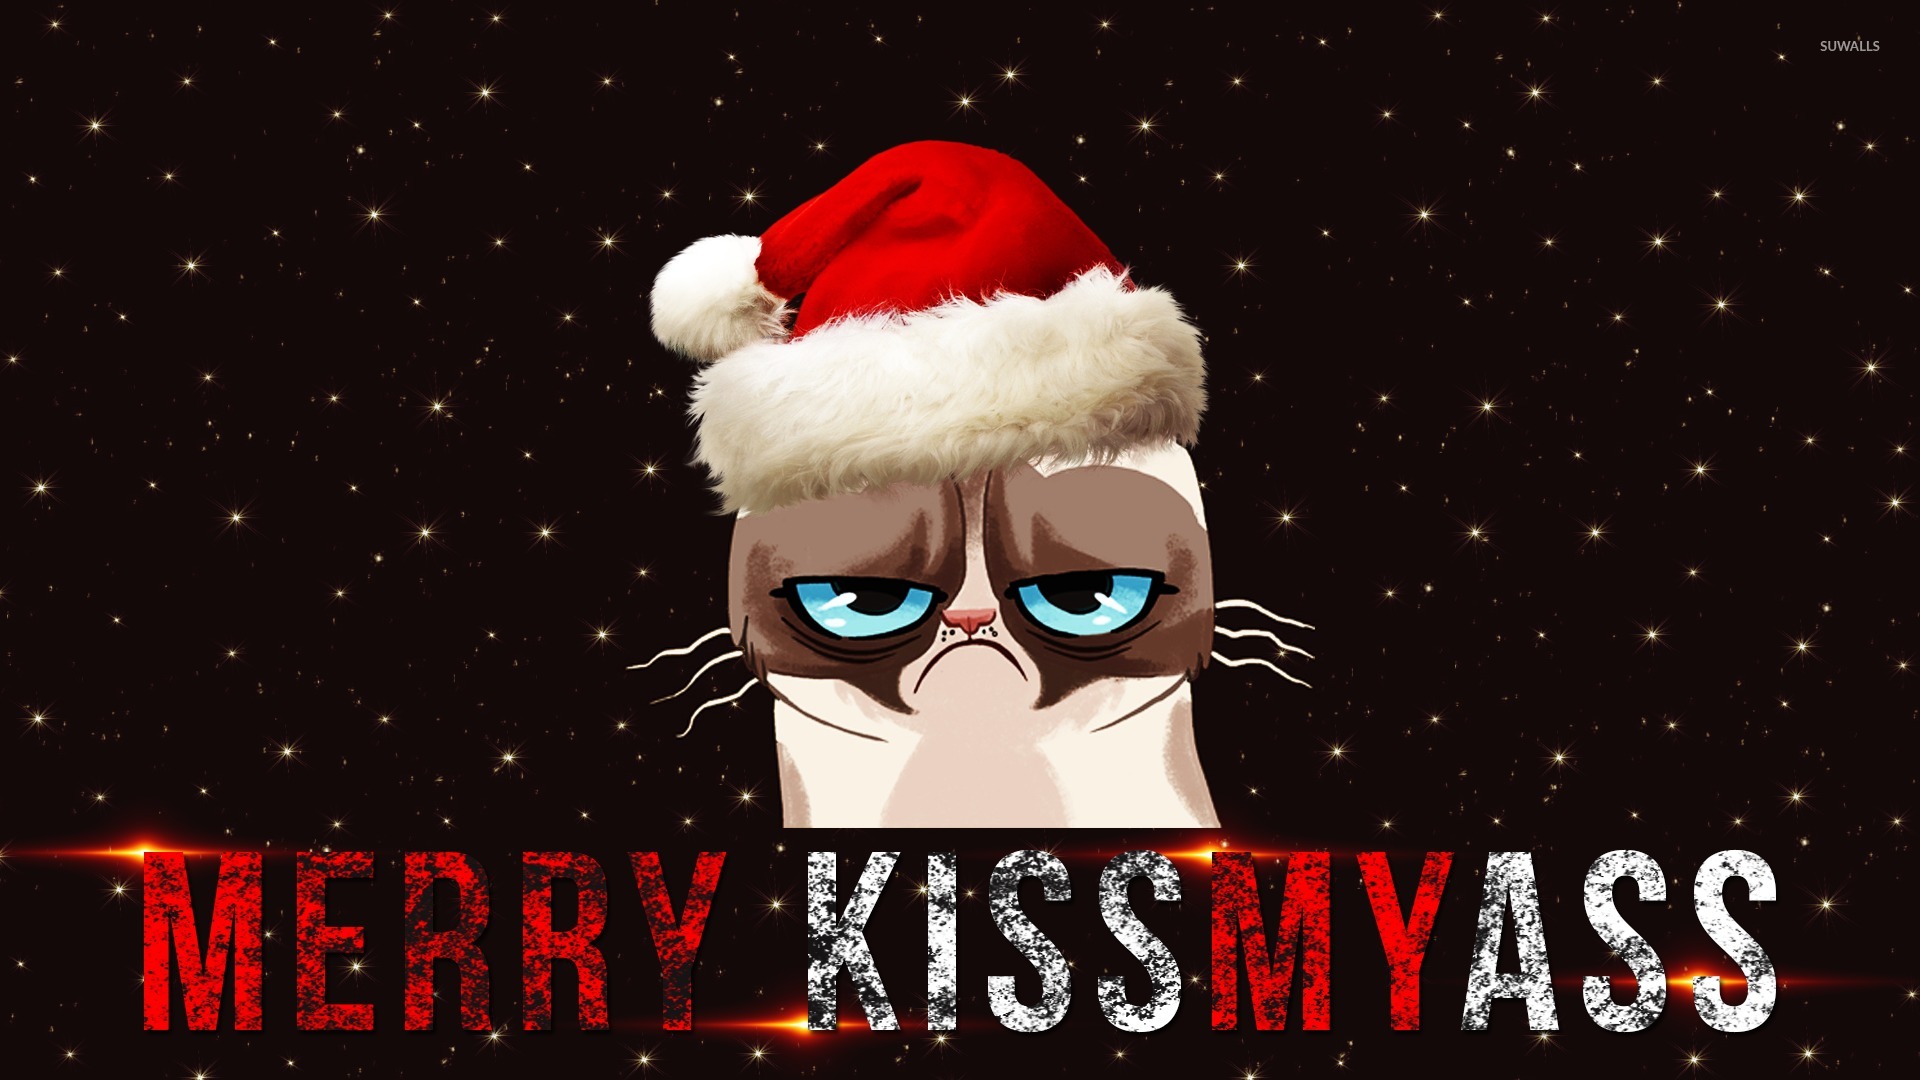 Grumpy Christmas wallpaper   Meme wallpapers   26213